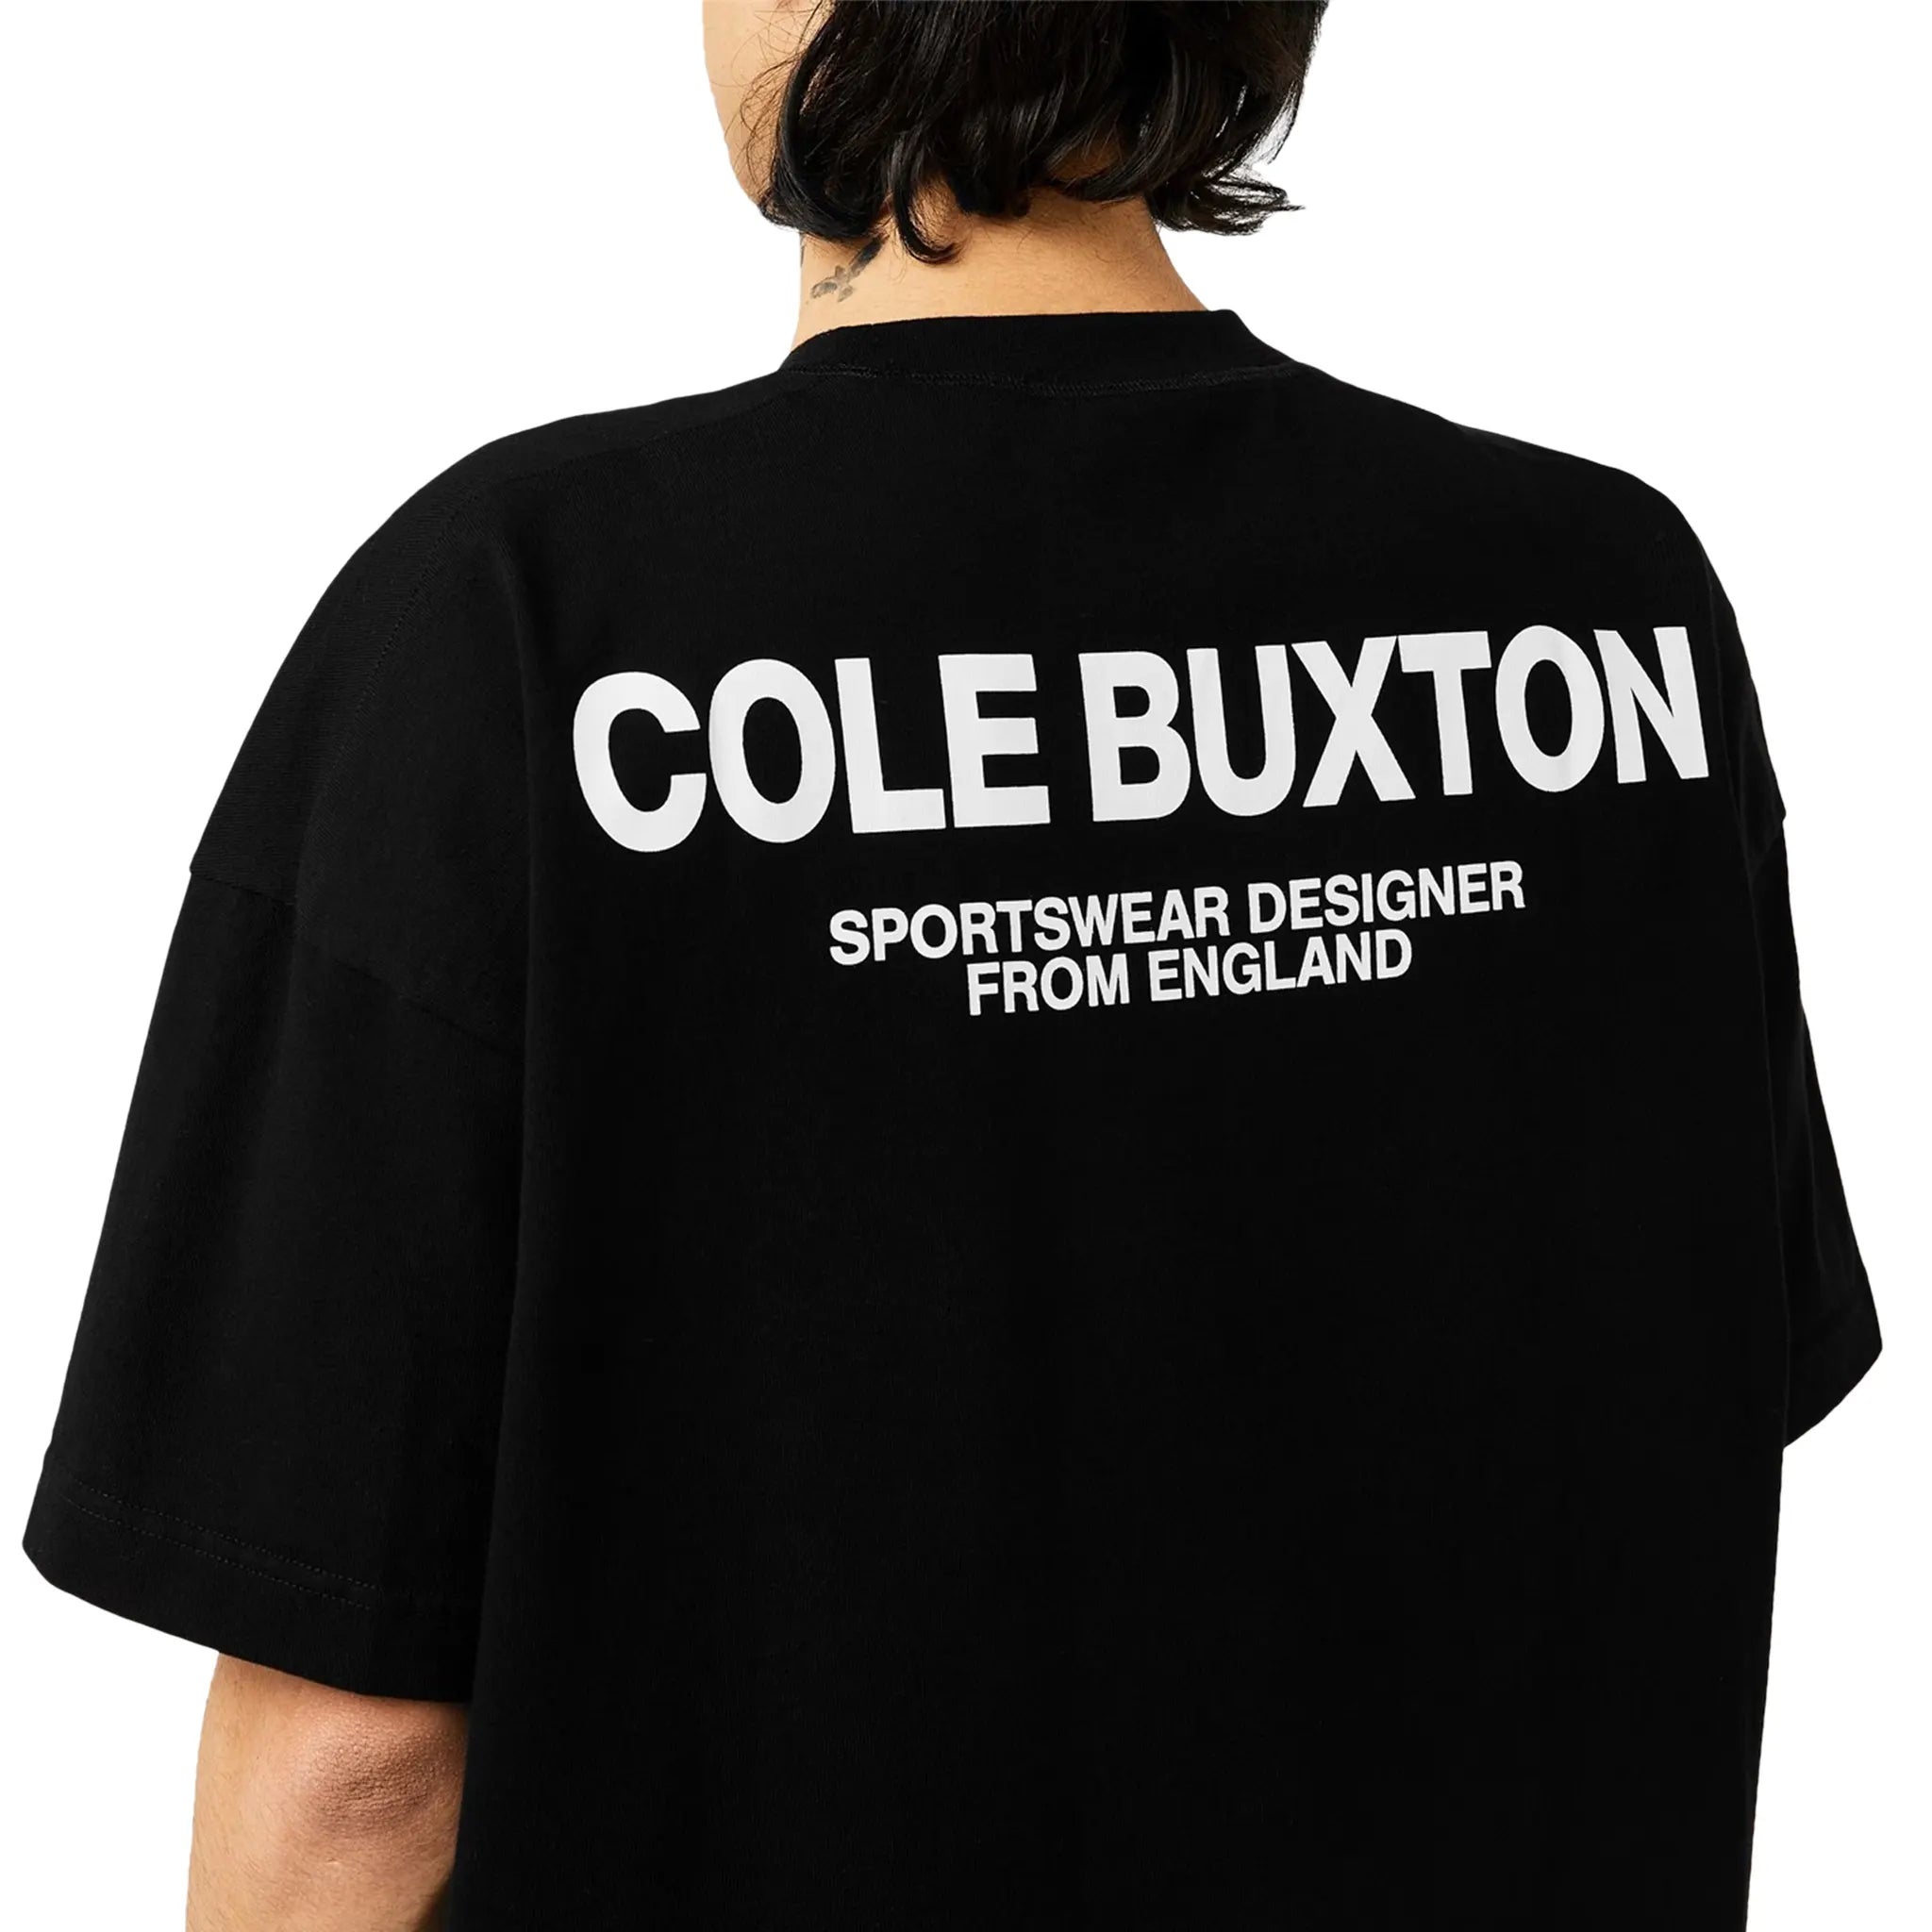 Back Detail view of Cole Buxton CB Sportswear Black T Shirt aw23cbst001-000